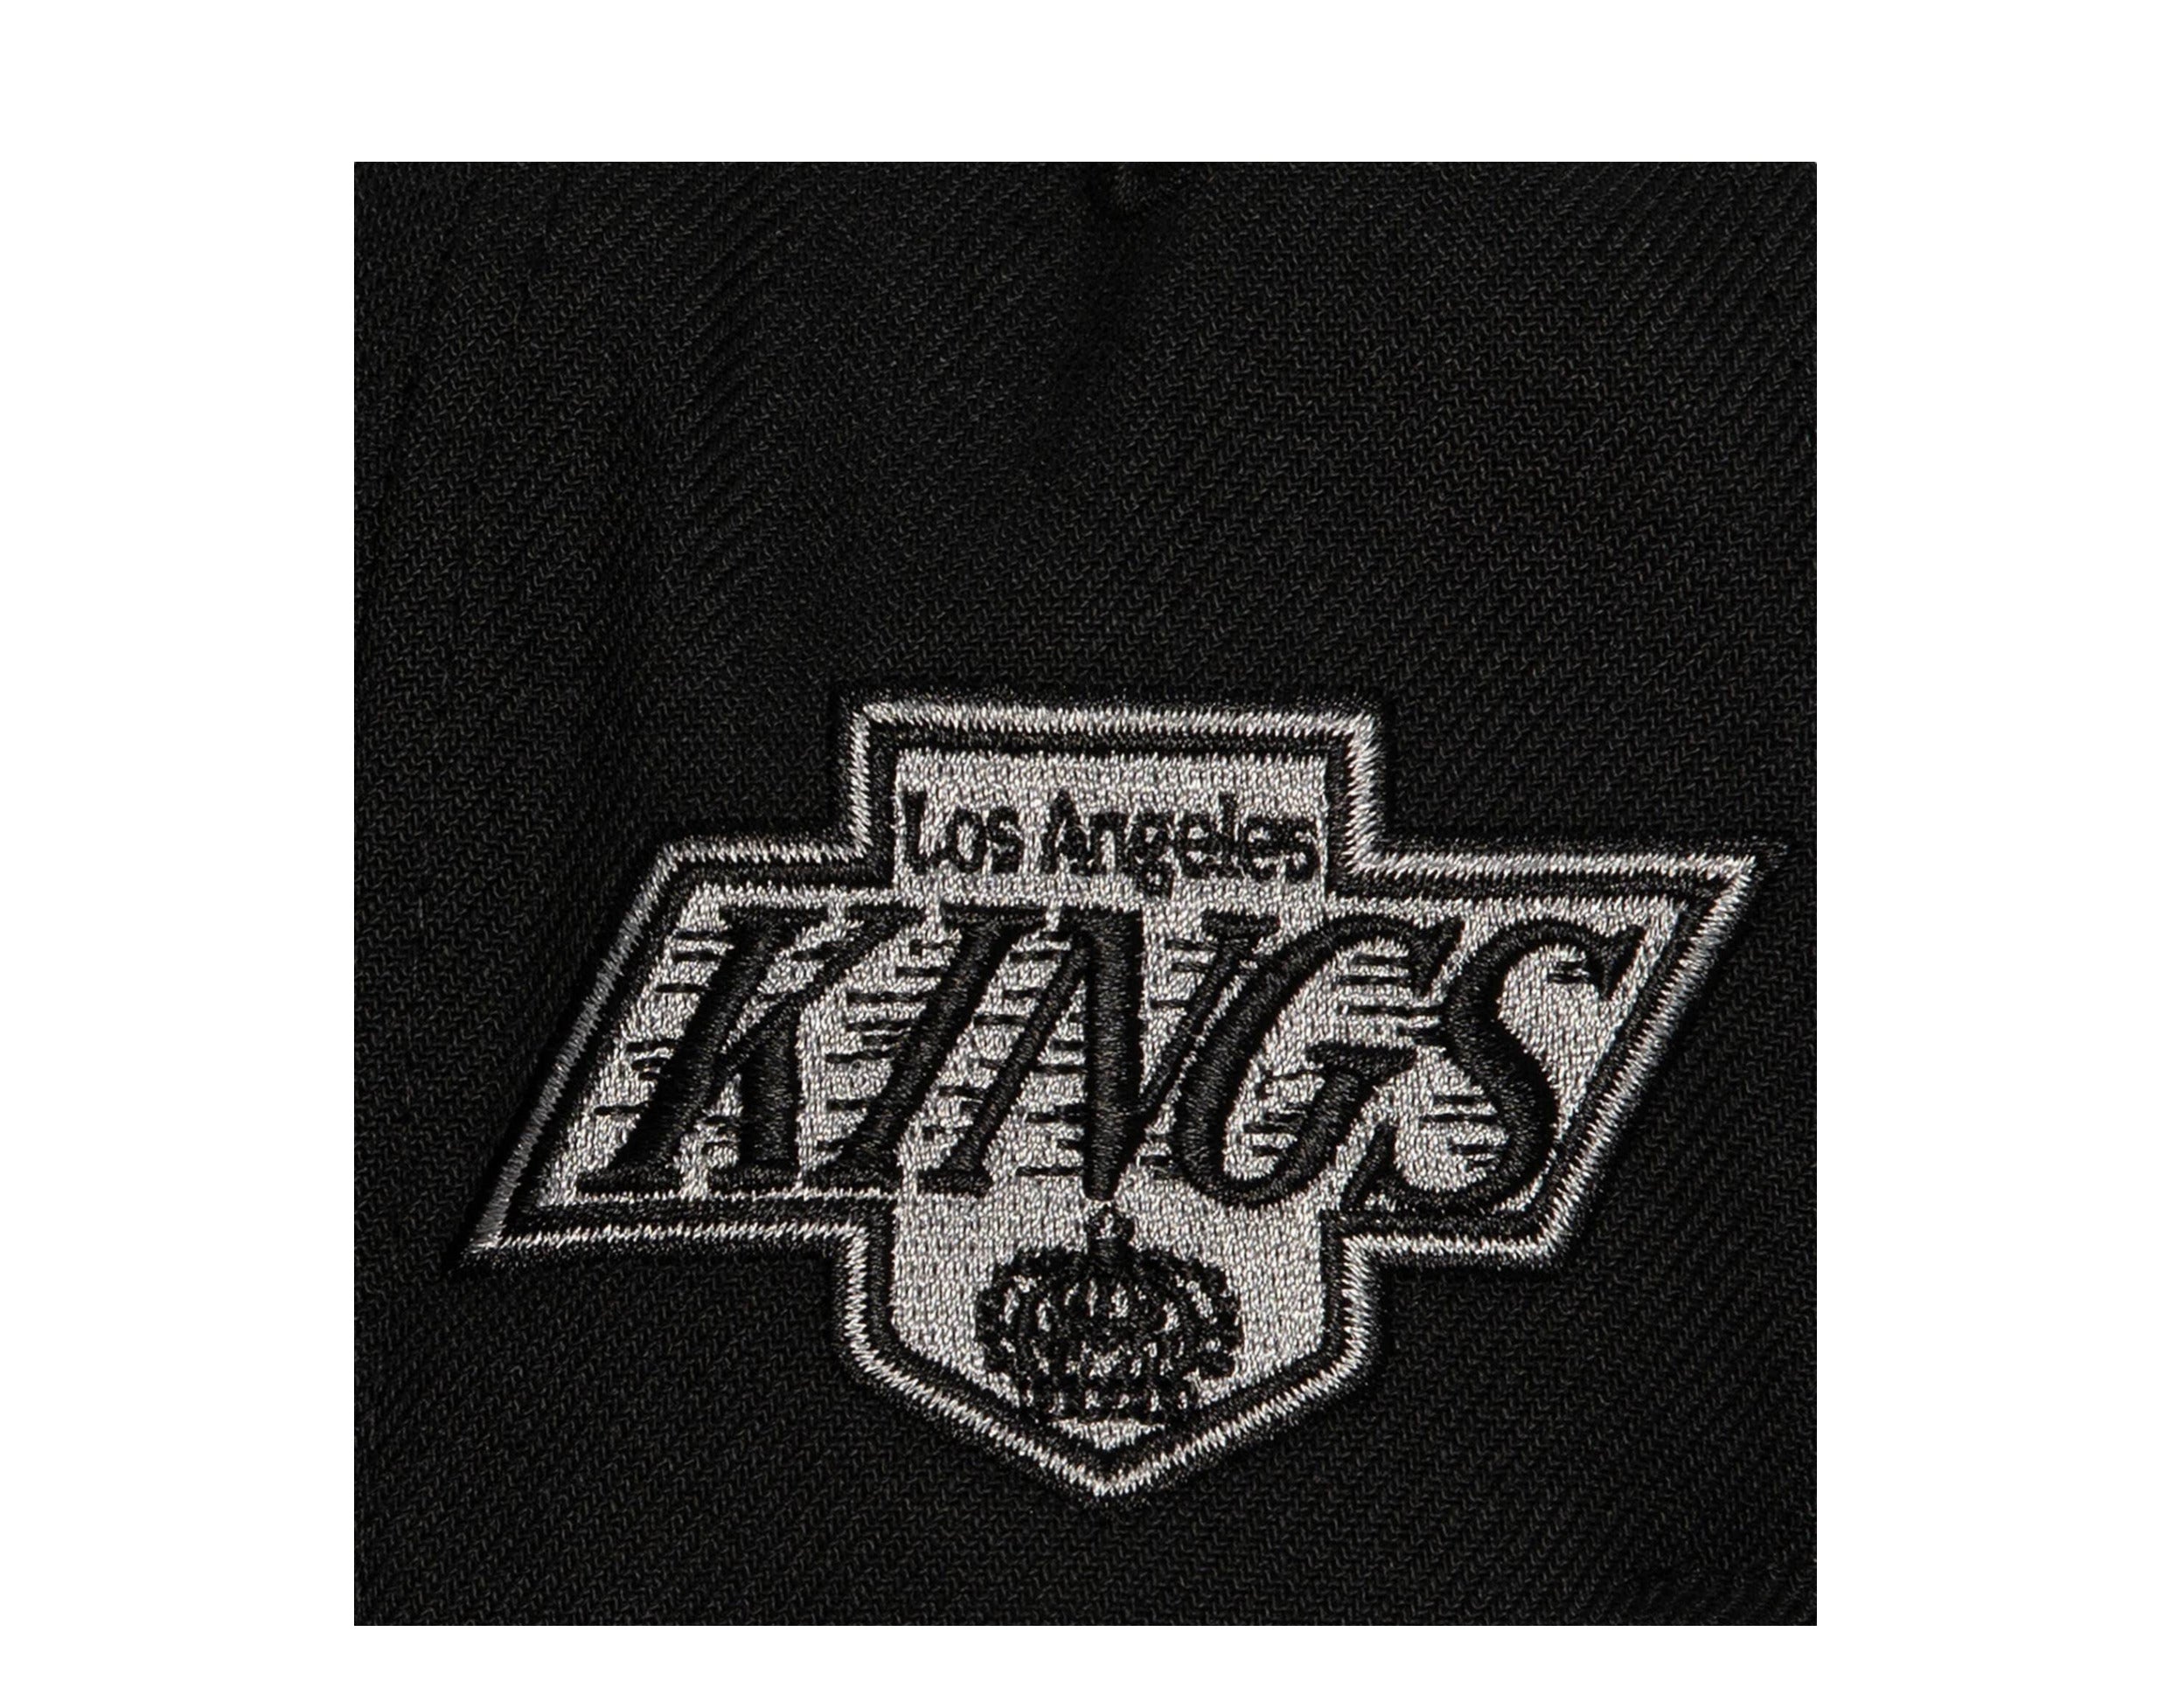 Los Angeles Kings Mitchell & Ness Vintage Script Snapback Hat